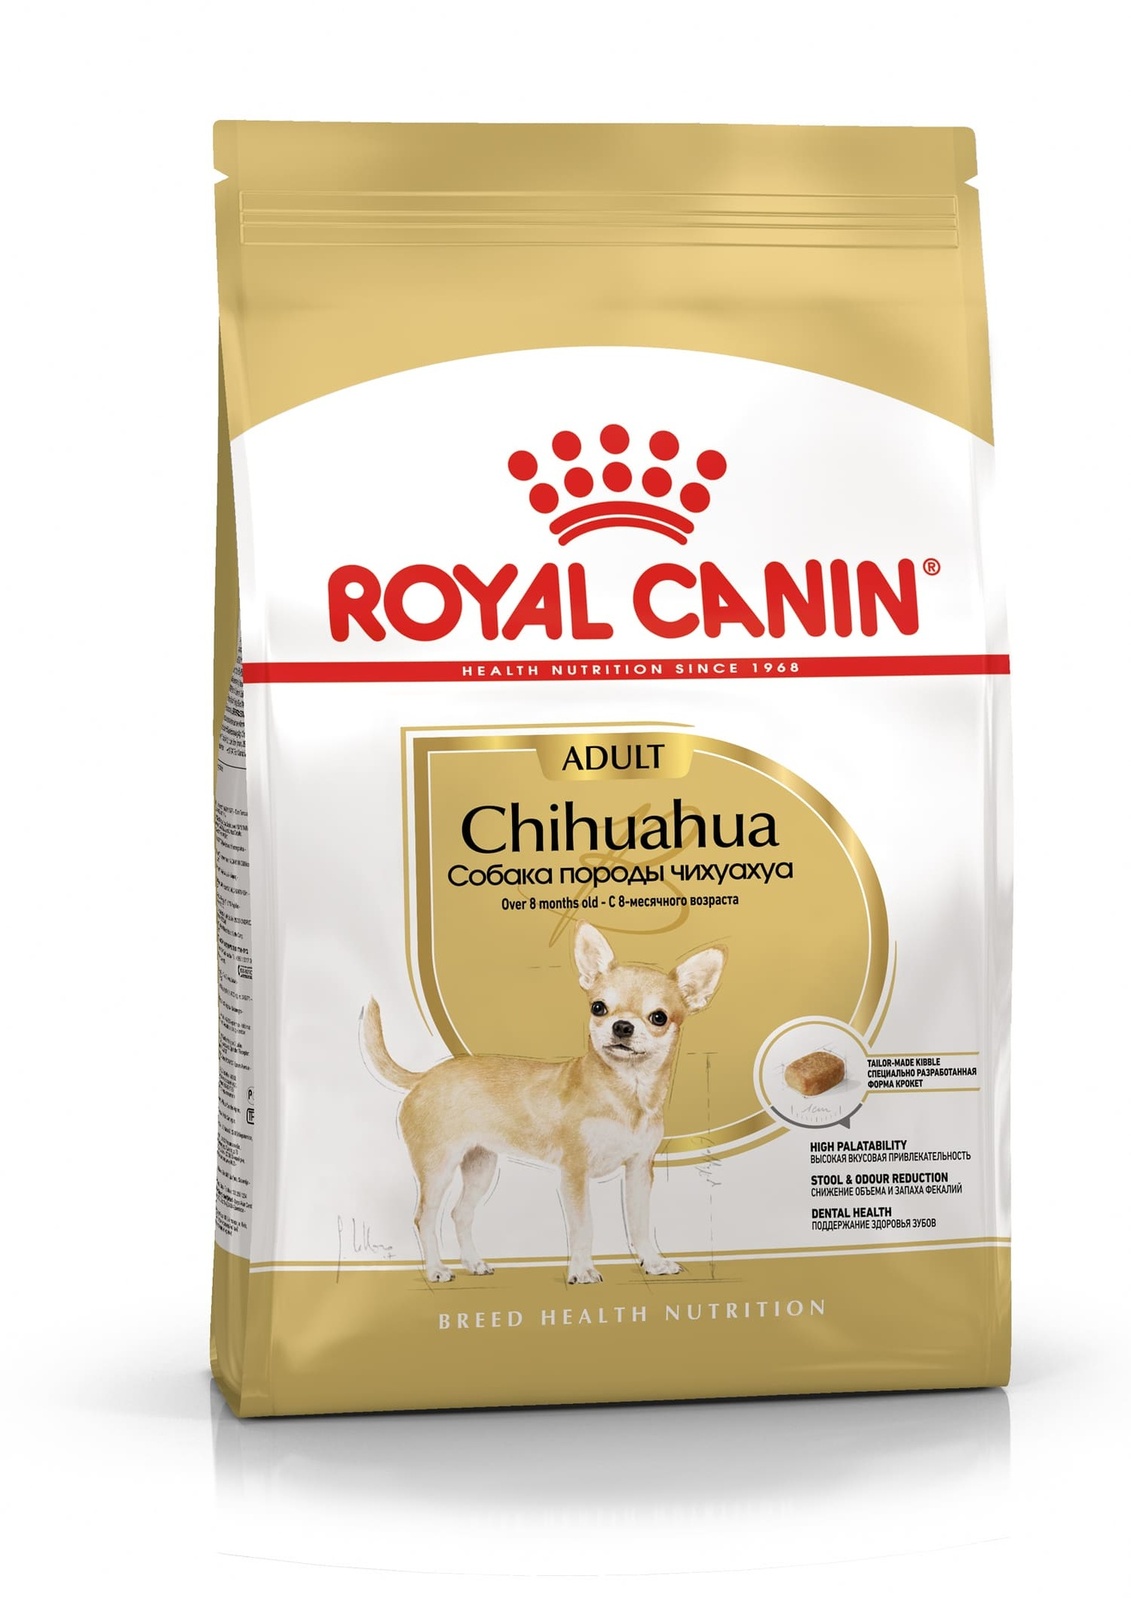 Royal Canin Royal Canin сухой корм для чихуахуа с 8 месяцев (500 г) сухой корм для собак чихуахуа 8 месяцев royal canin chihuahua adult 500 г